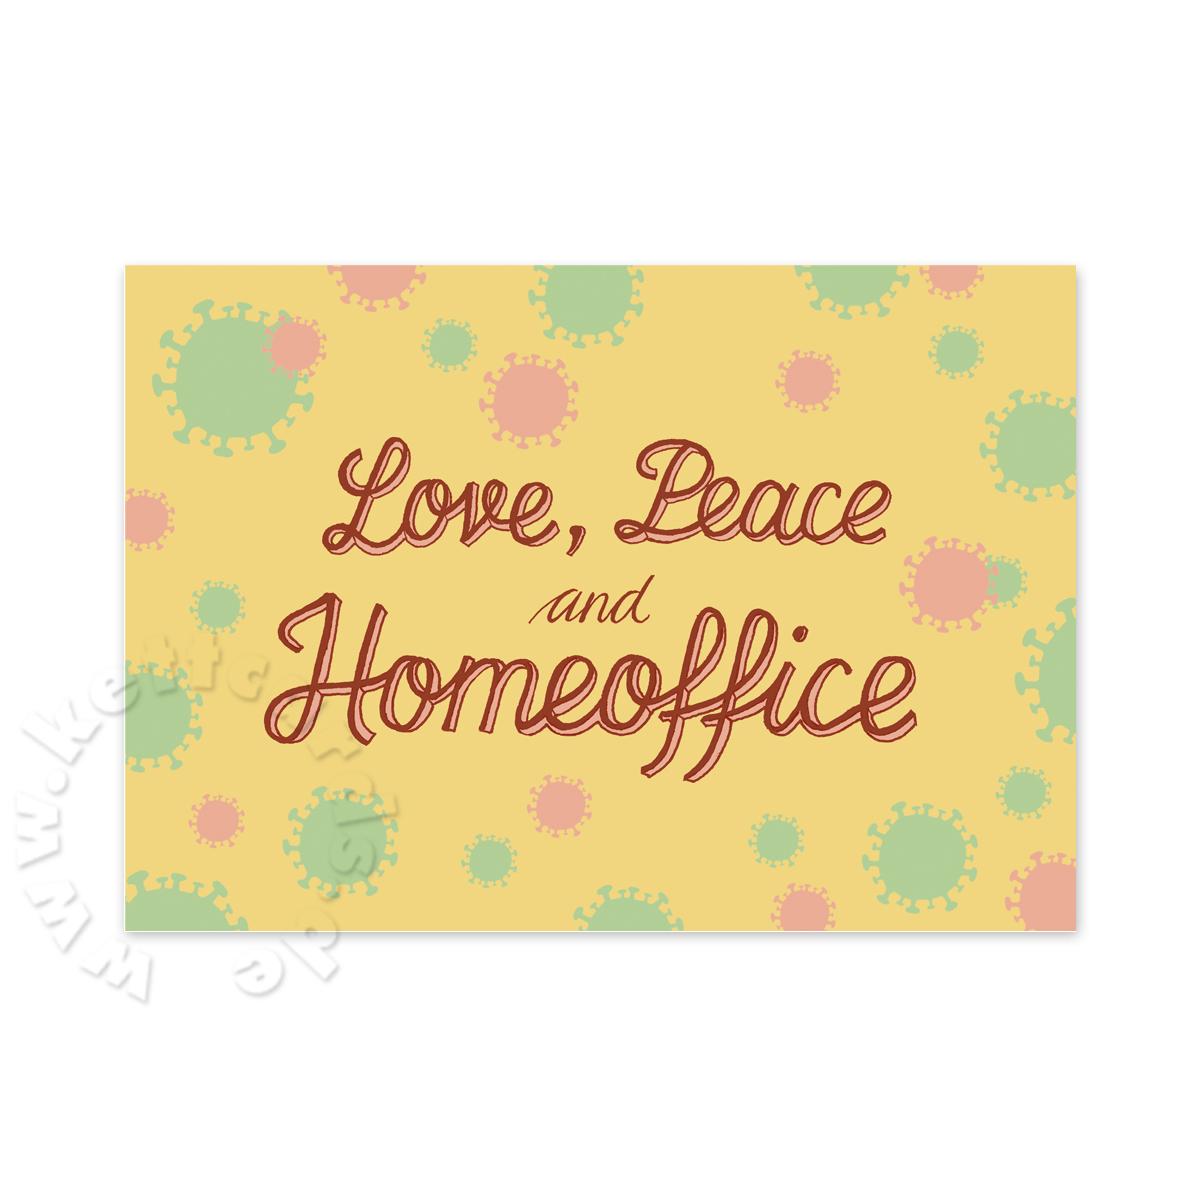 Corona-Postkarte: Love, Peace and Homeoffice